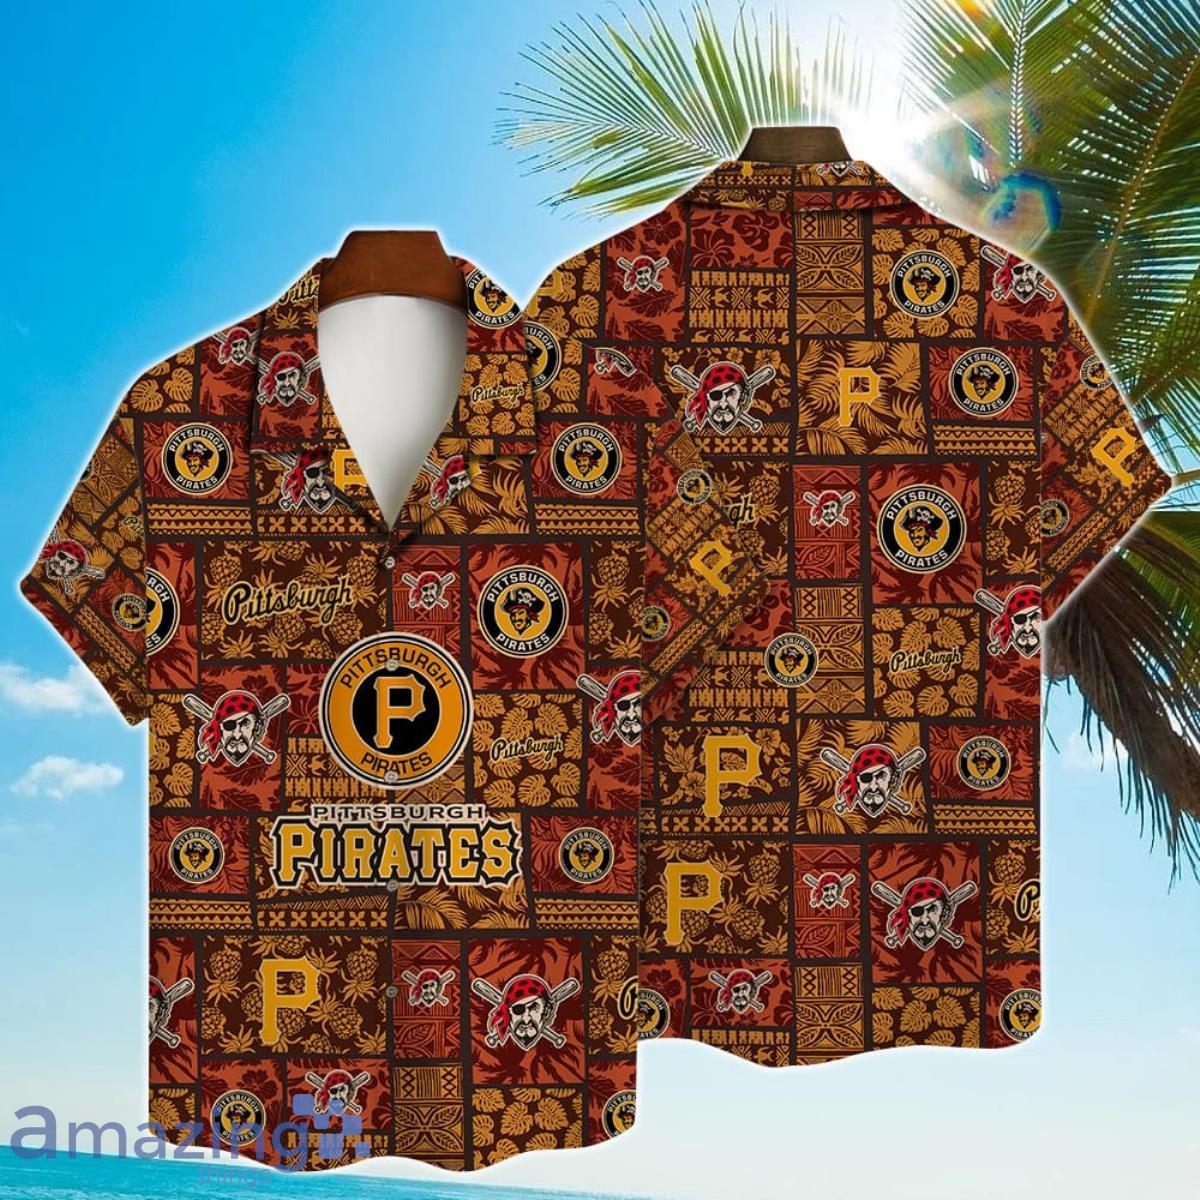 Pittsburgh Pirates MLB For Sports Fan 3D Printed Hawaiian Style Shirt -  Senprintmart Store